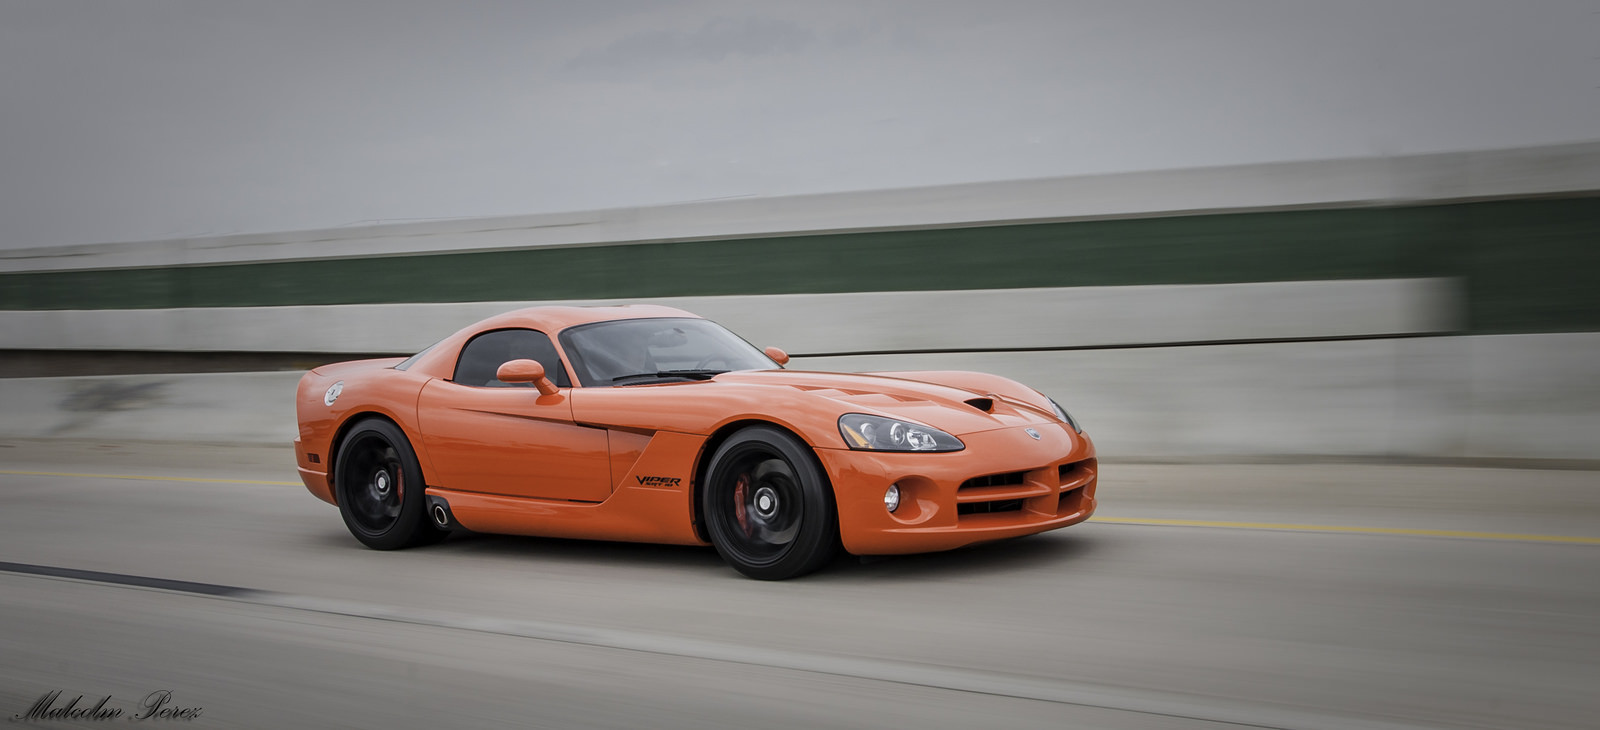 2008 Very Viper Orange Dodge Viper SRT-10 picture, mods, upgrades